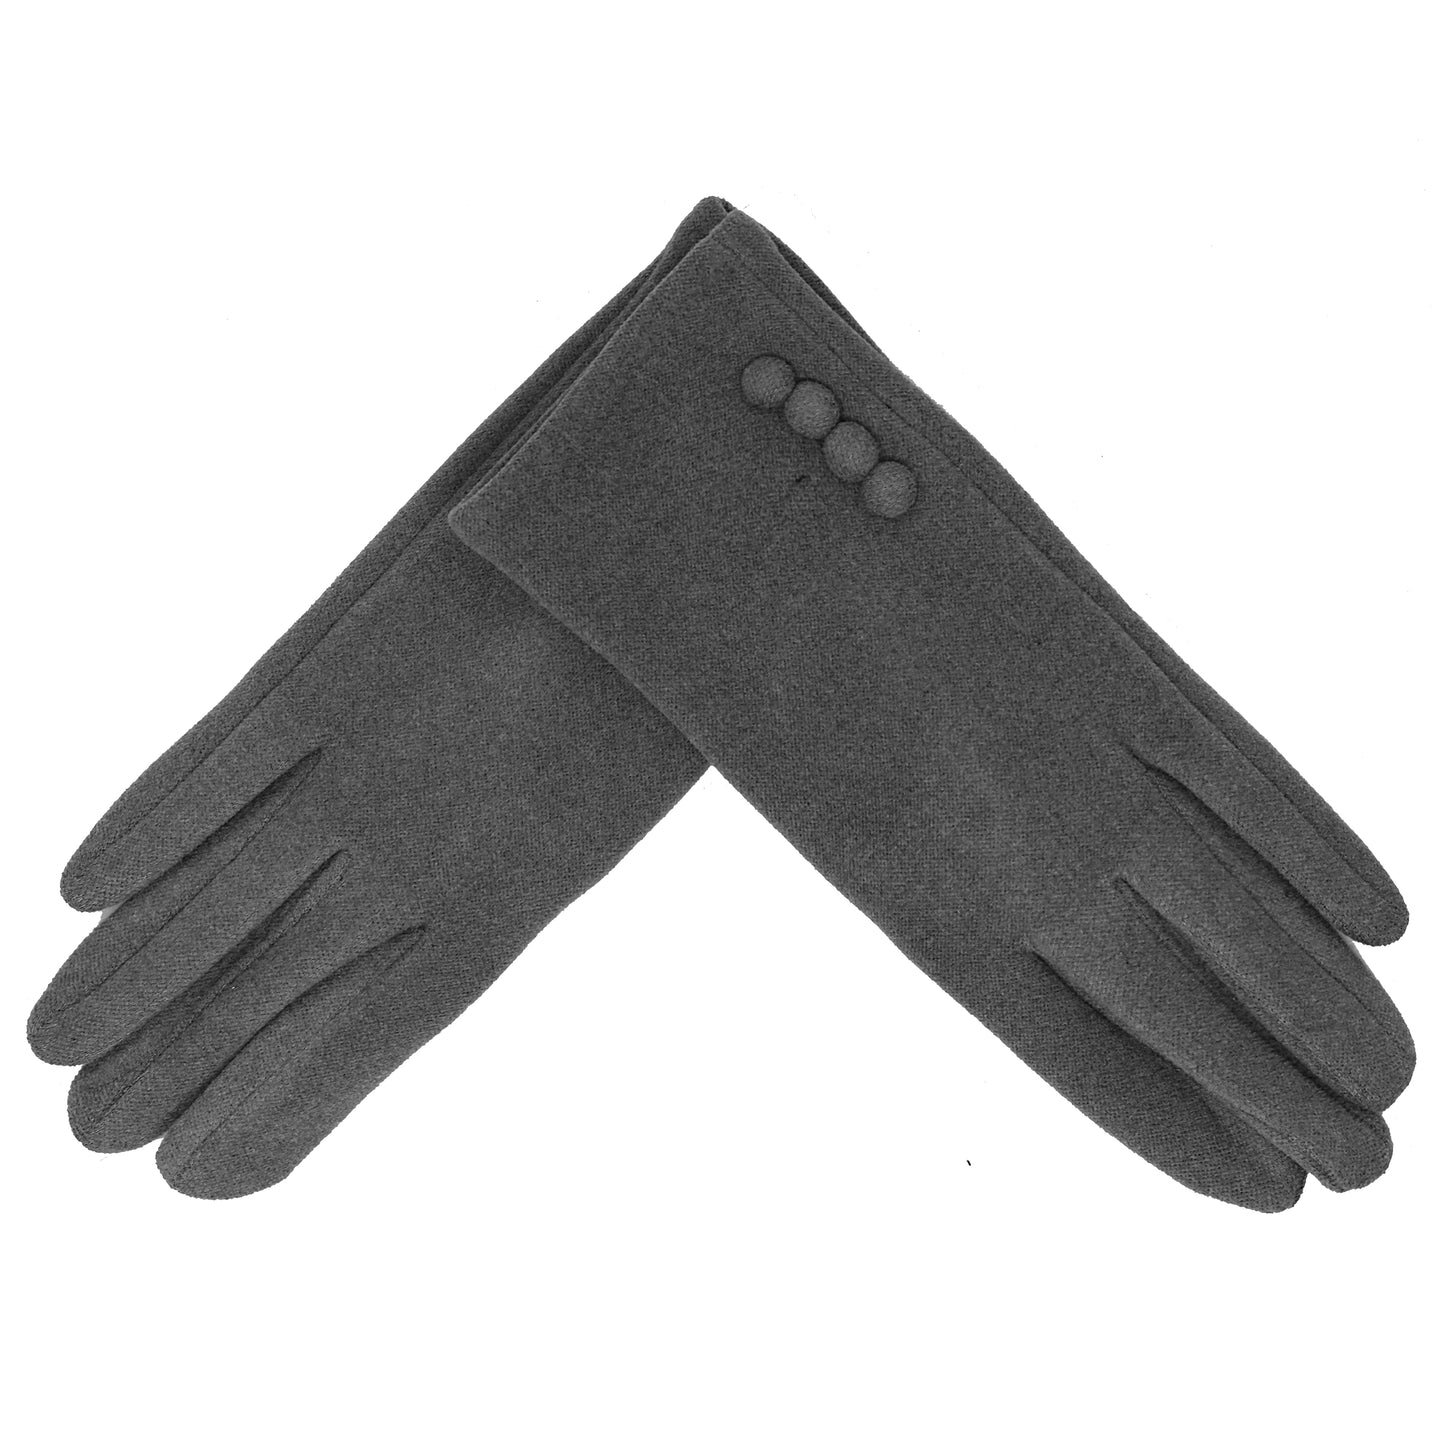 Four Button Touchscreen Plain Colour Gloves